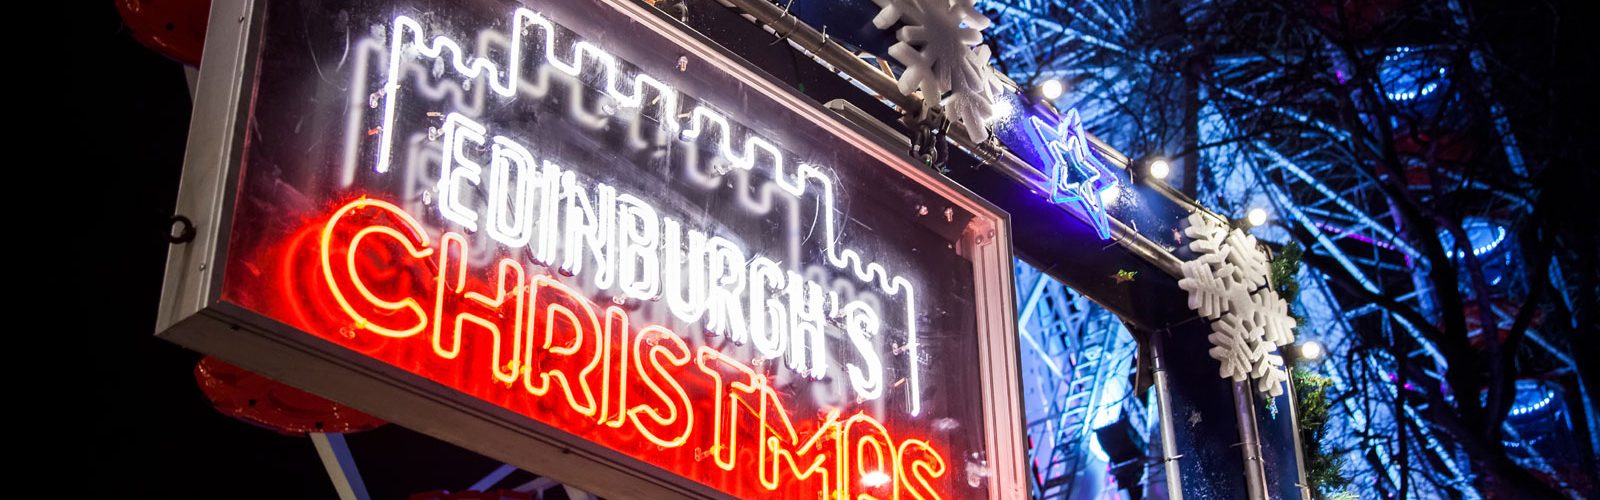 Christmas lights in Edinburgh